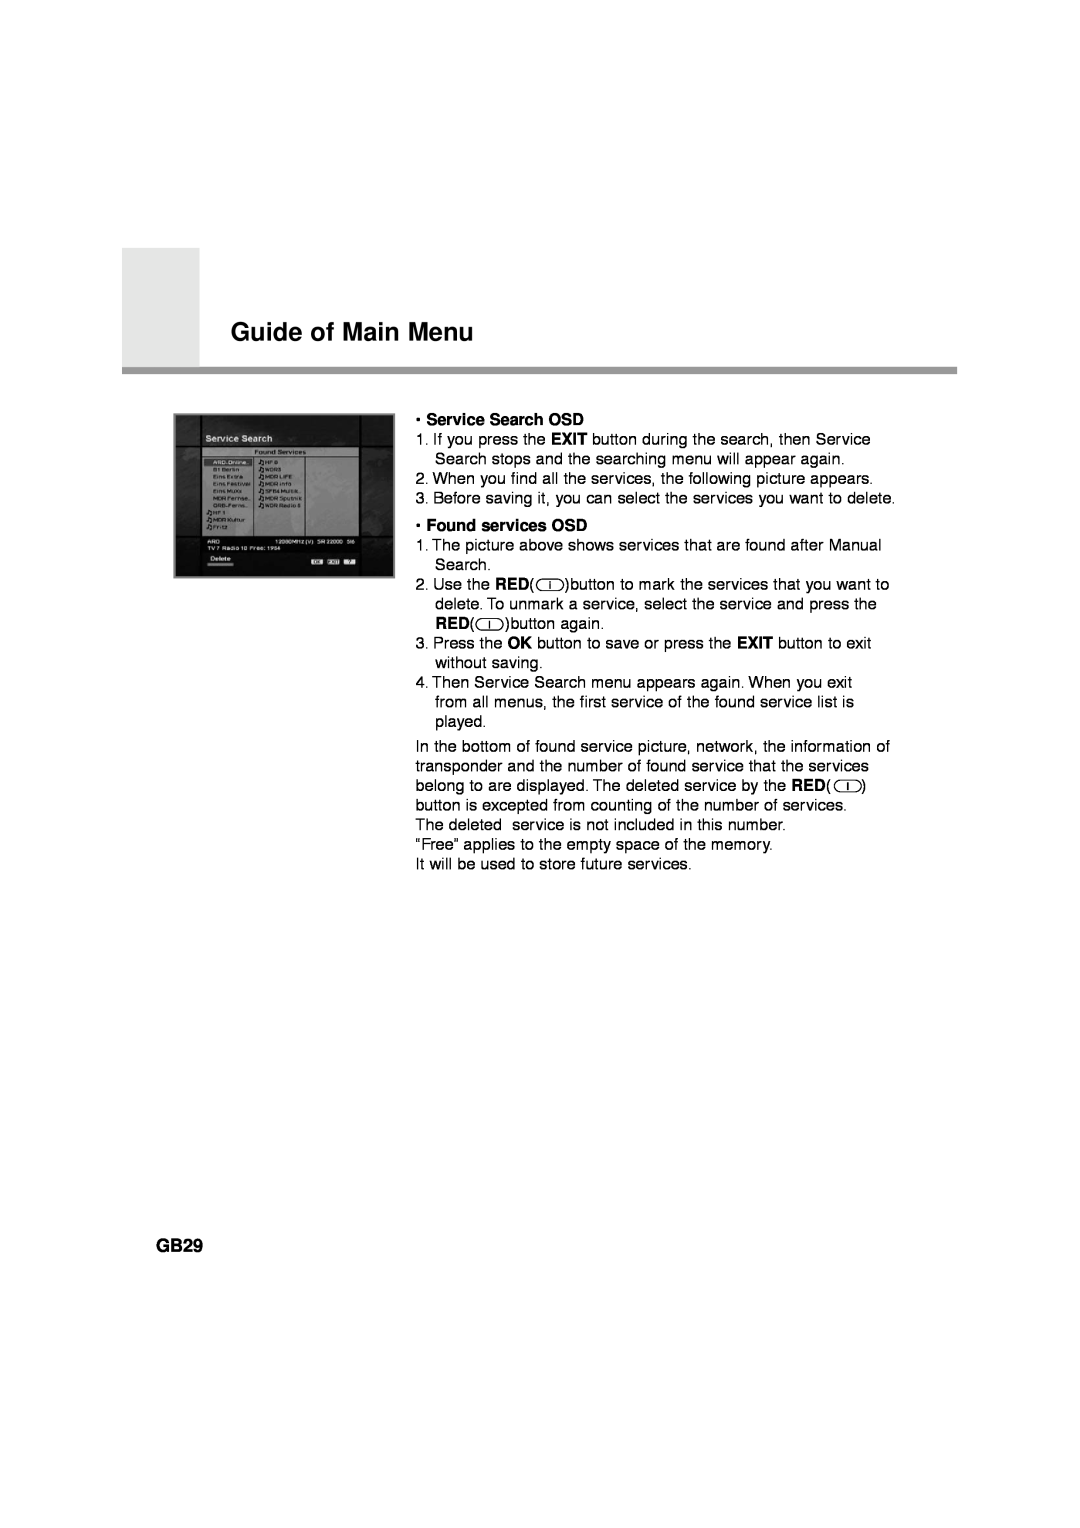 Humax VA-FOX, F1-FOX, NA-FOX, CA-FOX manual GB29, Service Search OSD, •Found services OSD, Guide of Main Menu 